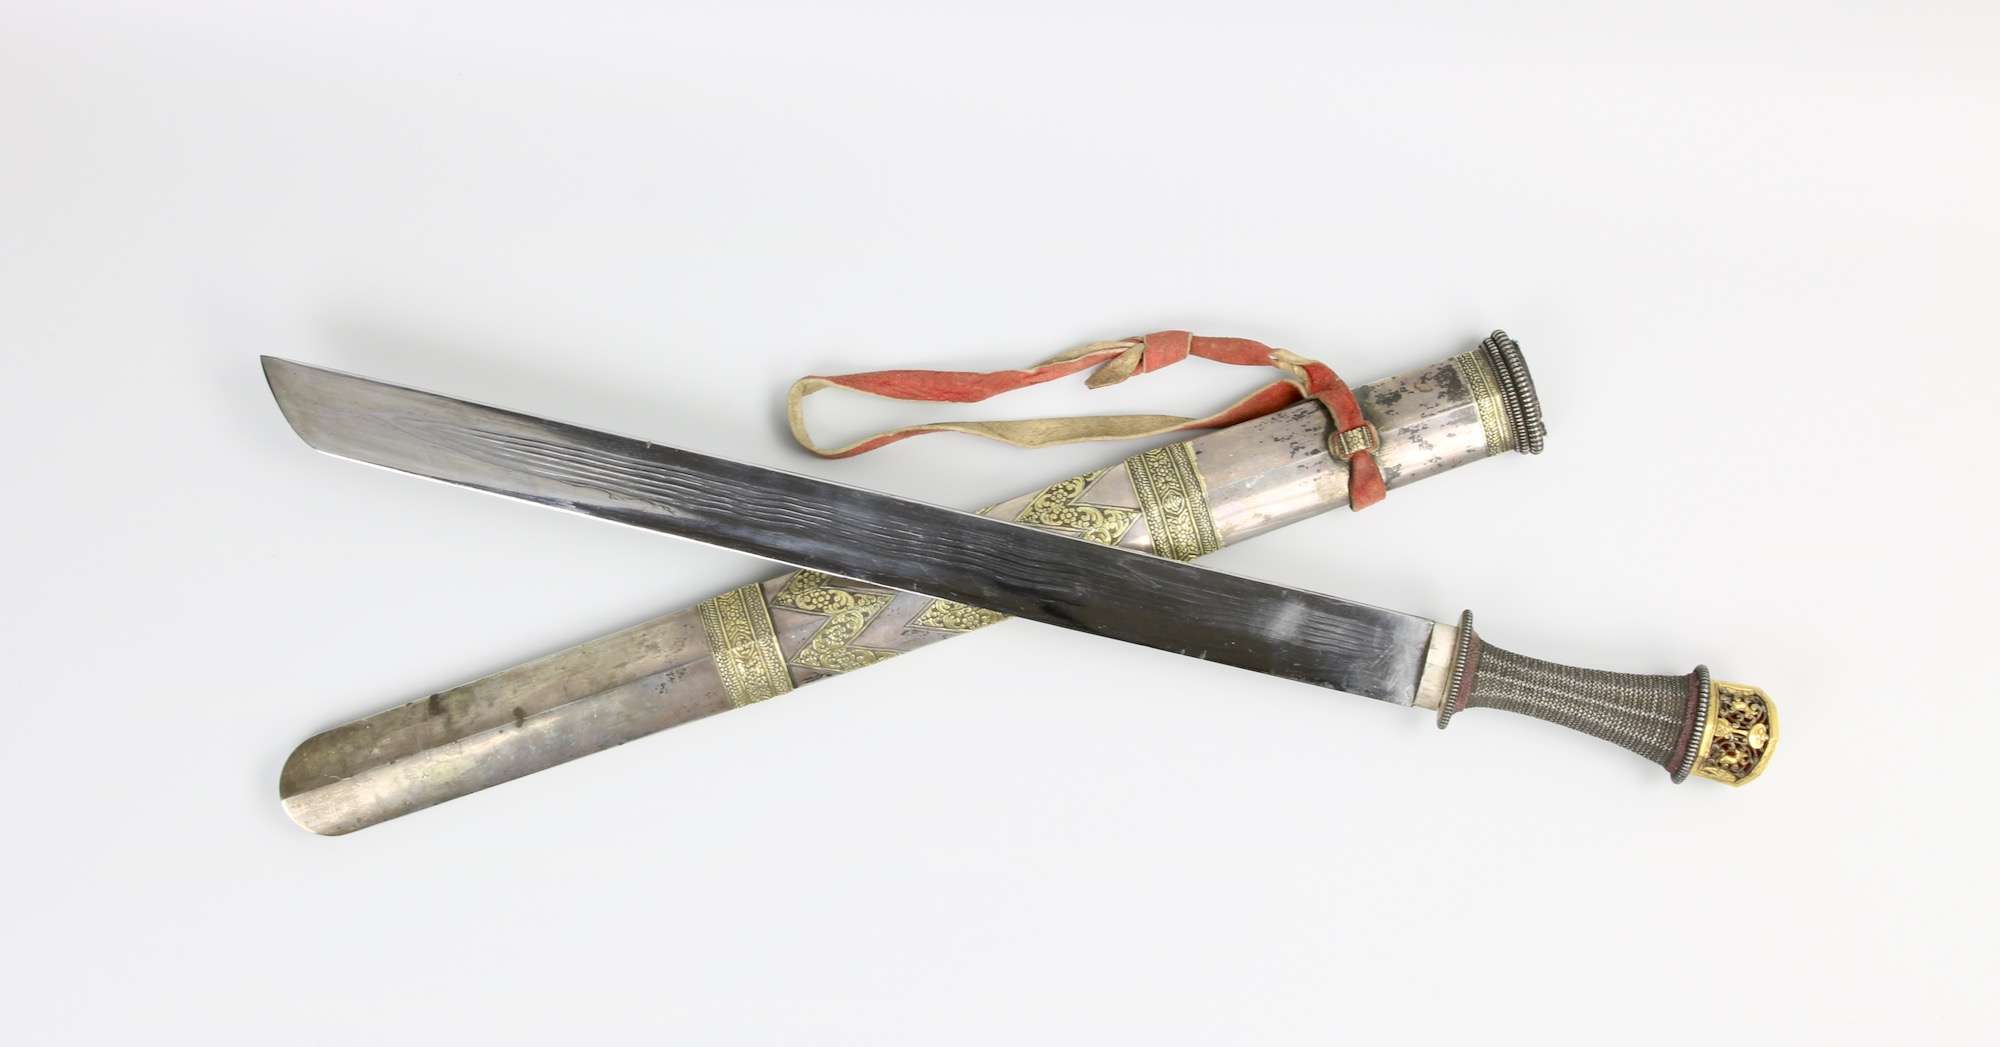 A fine Bhutanese sword with churi chenm scabbard